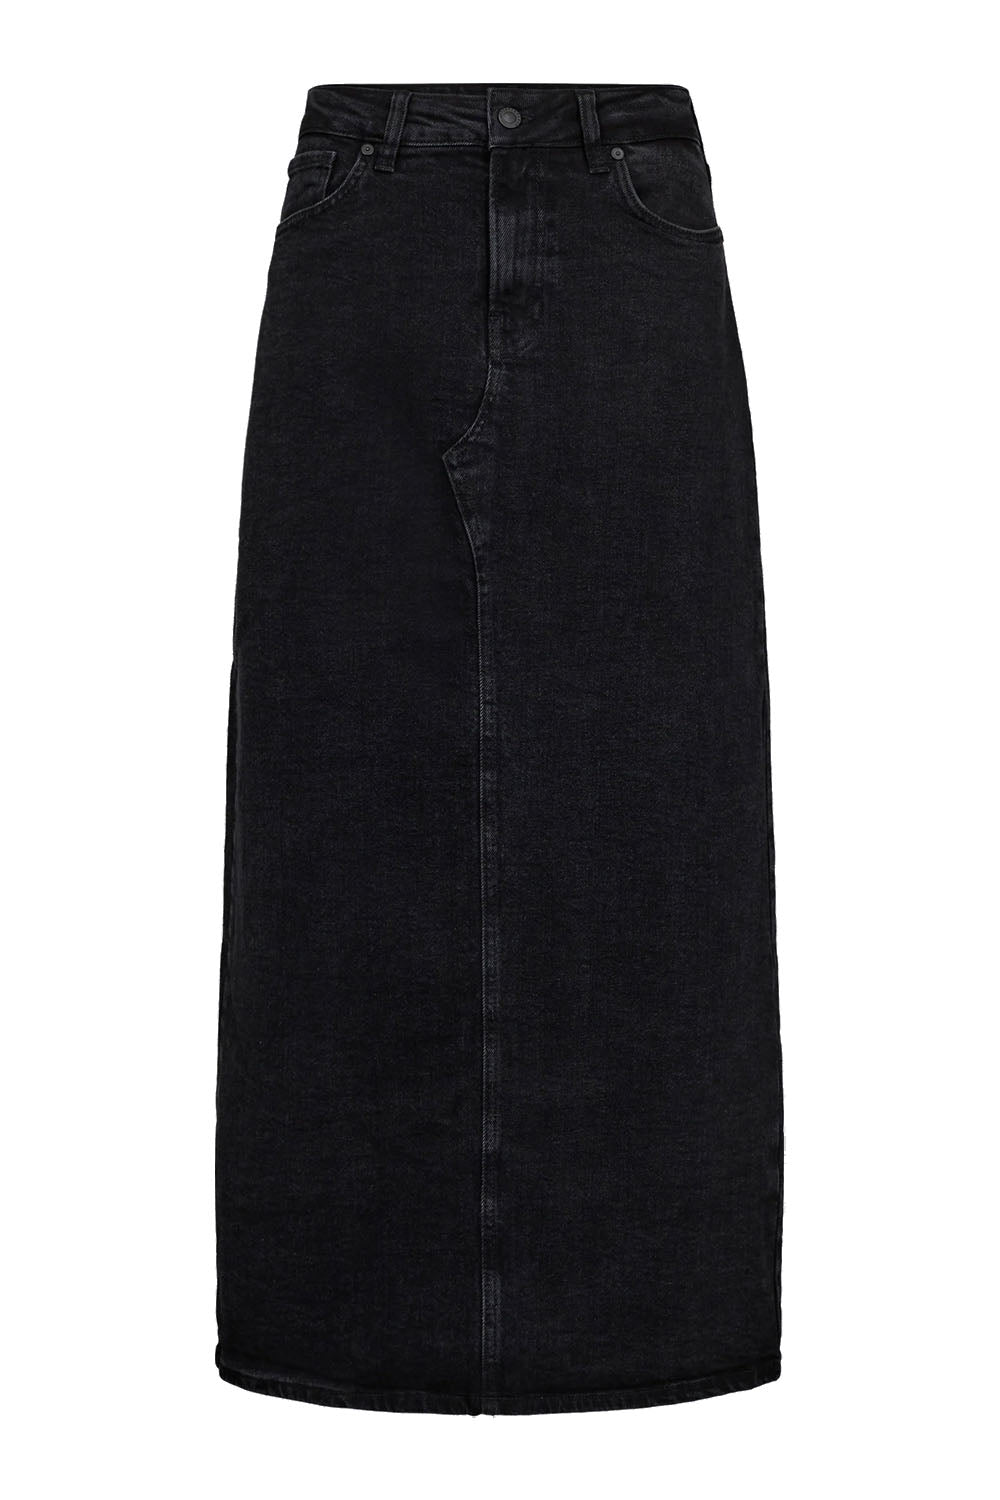 Zoe maxi skirt wash faded black